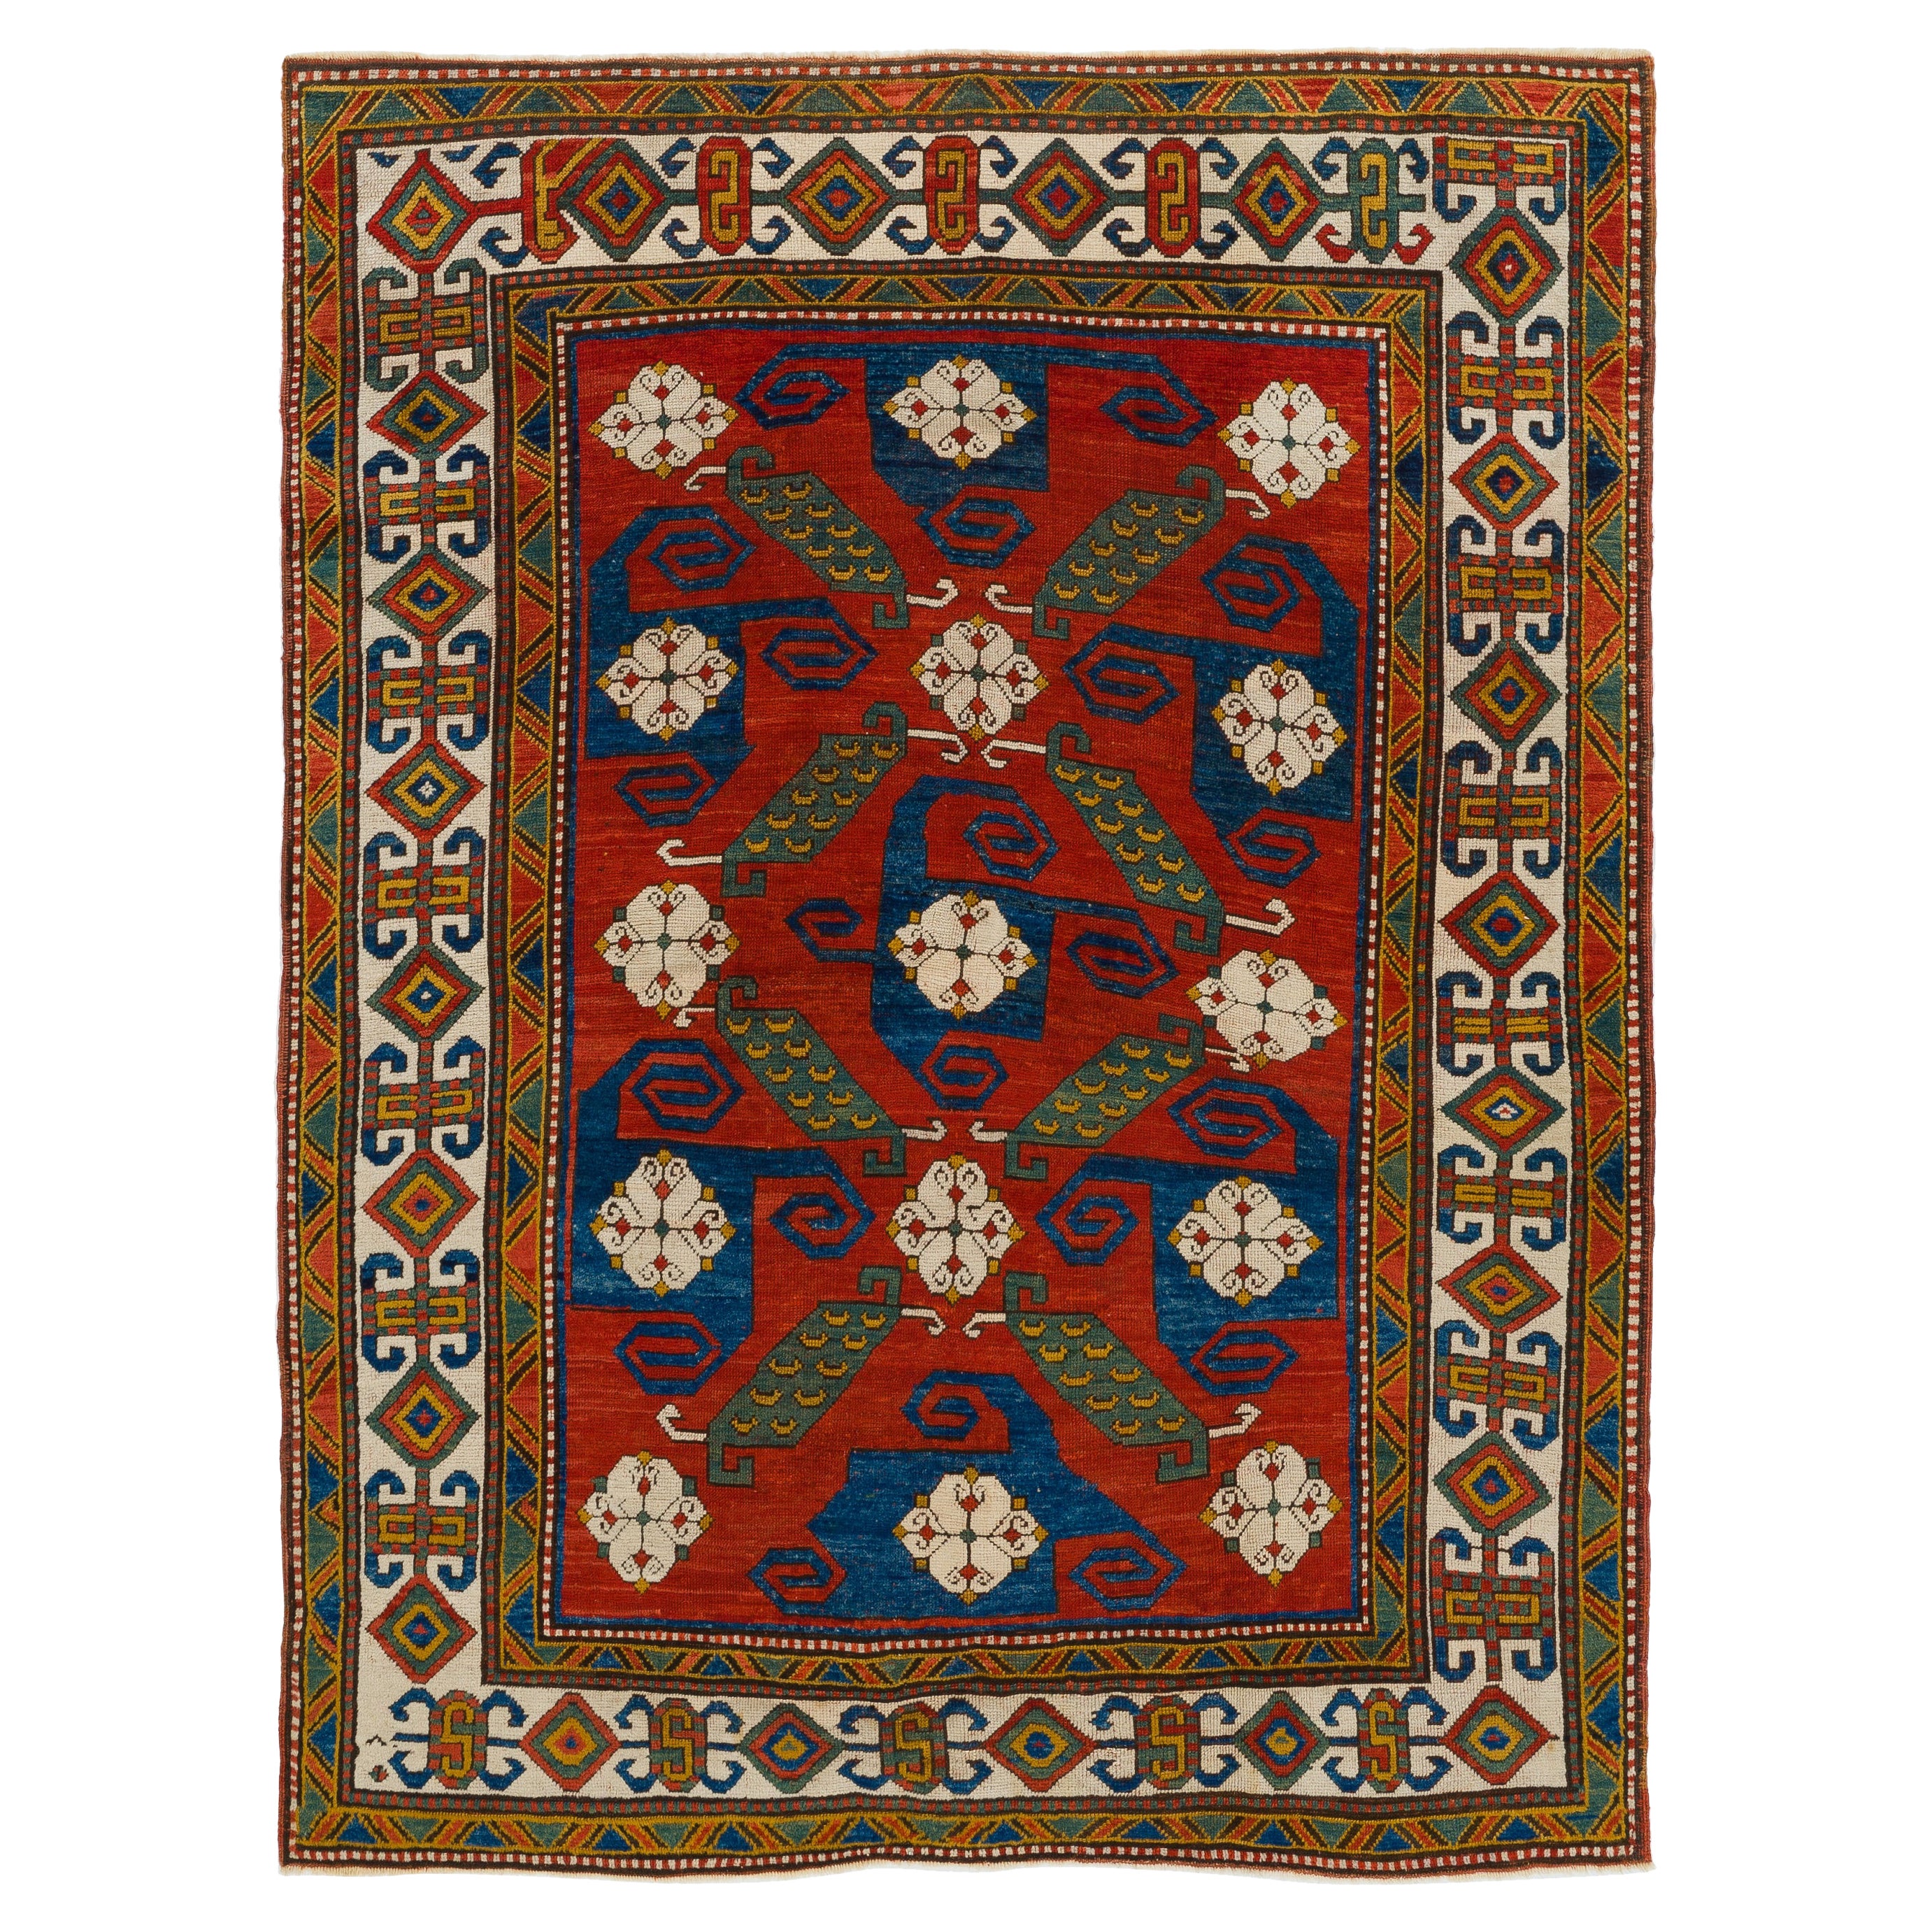 Antiker kaukasischer Pinwheel-Teppich aus Kasach. Top-Regal-Sammlerteppich. 5'6" x 7'2"